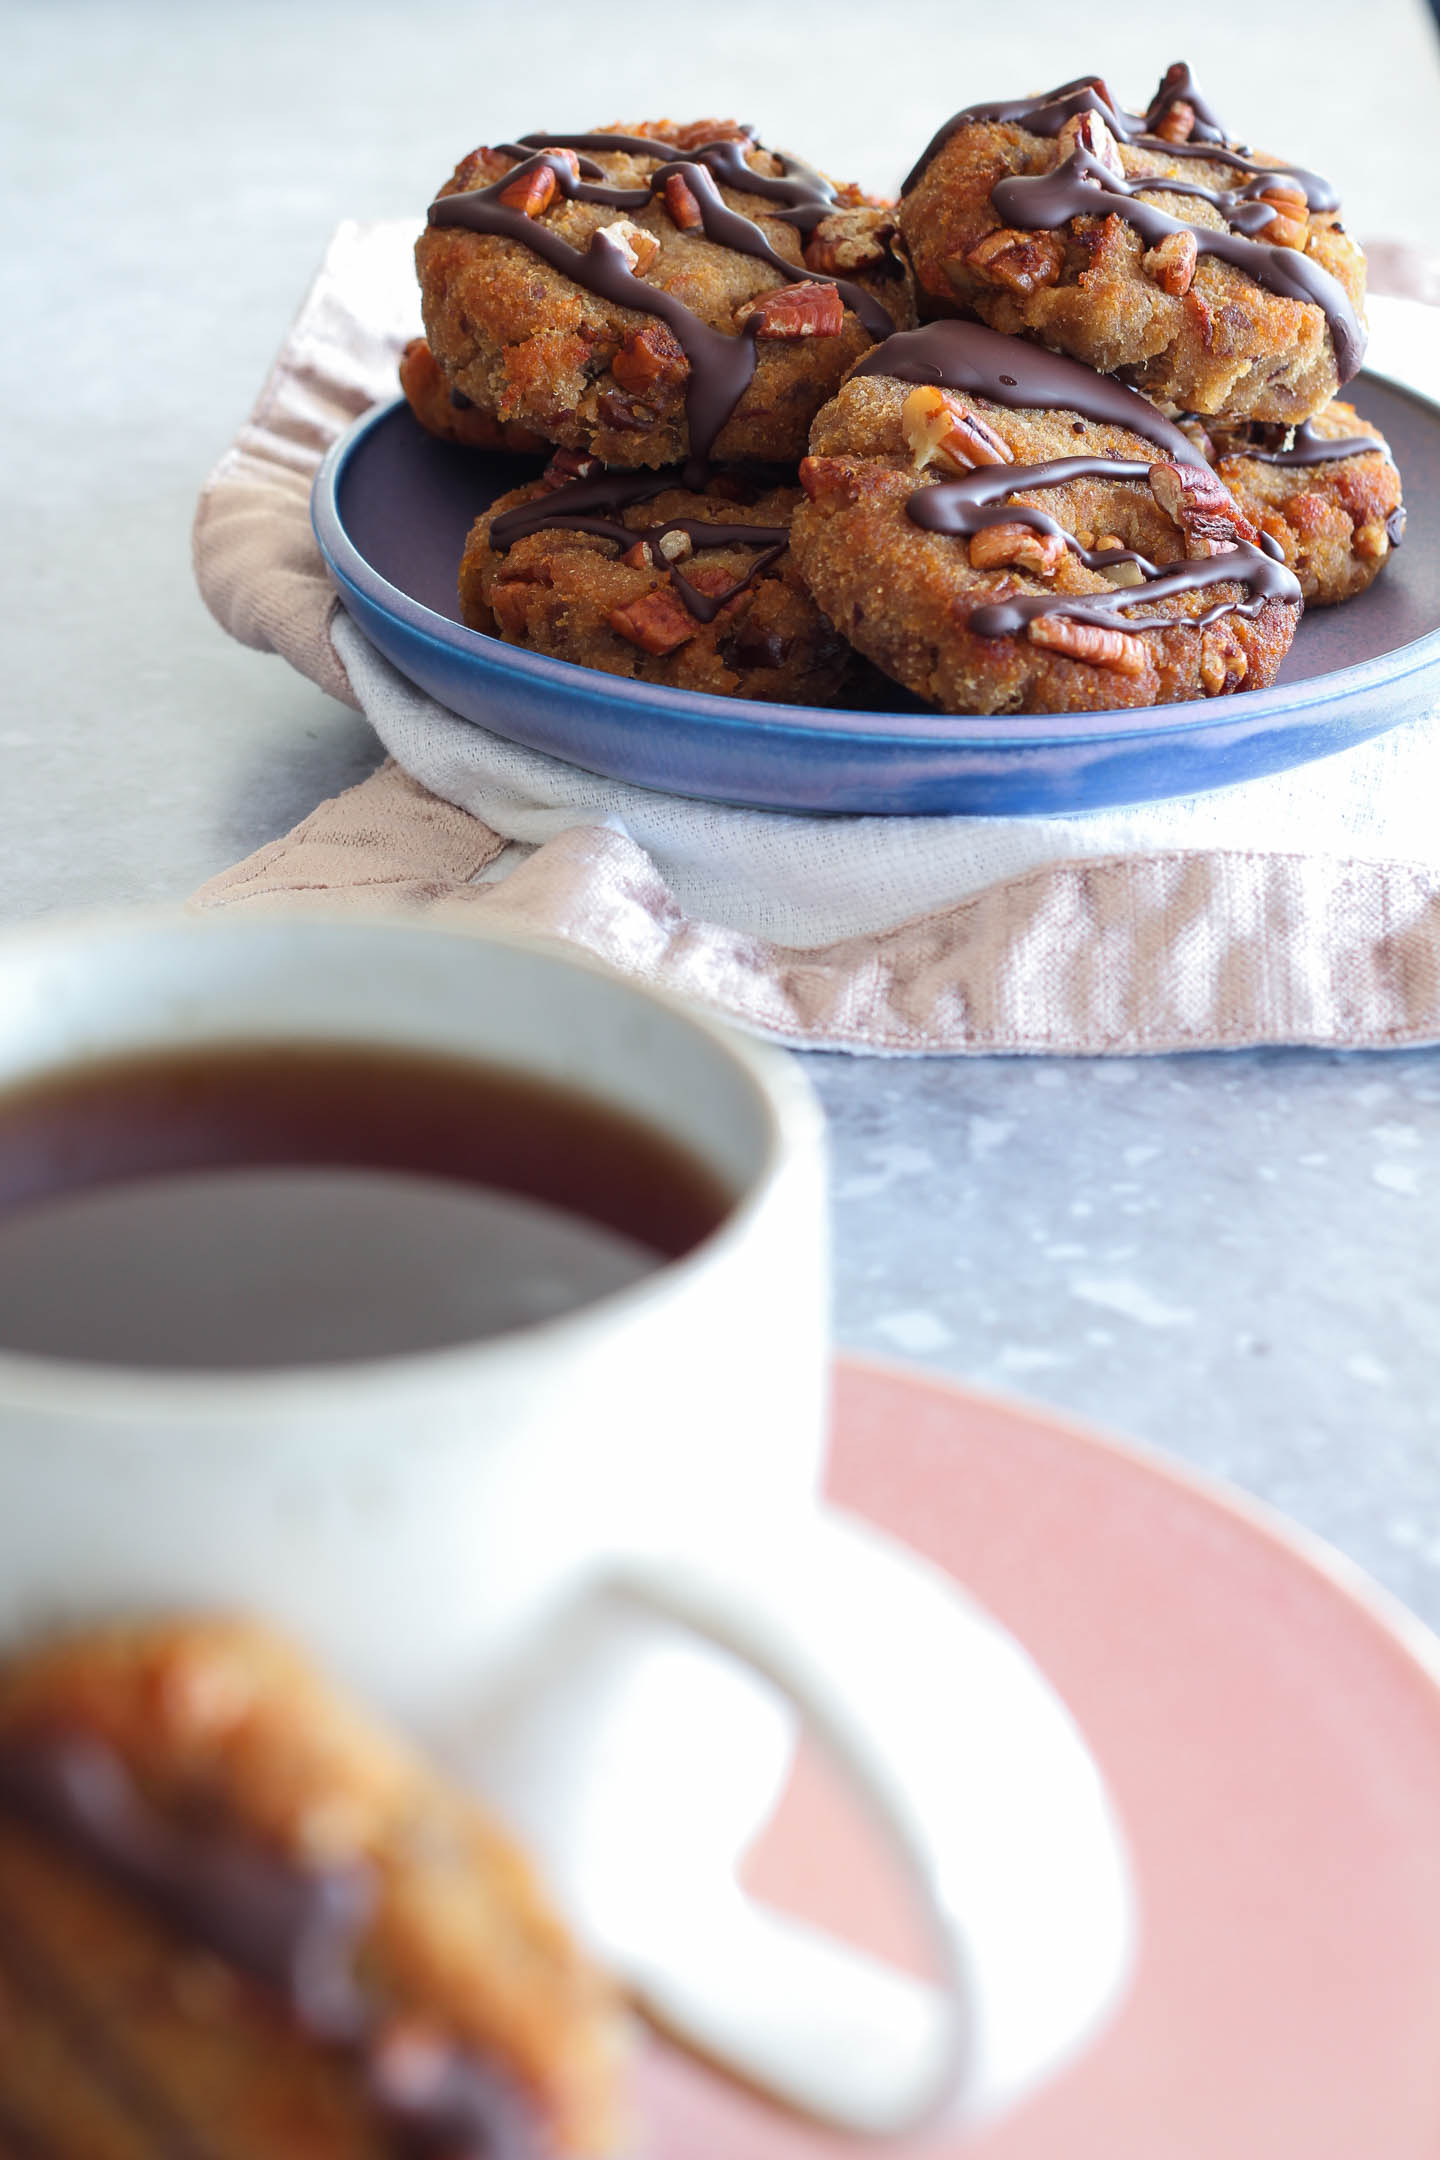 Banana Date and Pecan Collagen Cookies served with tea